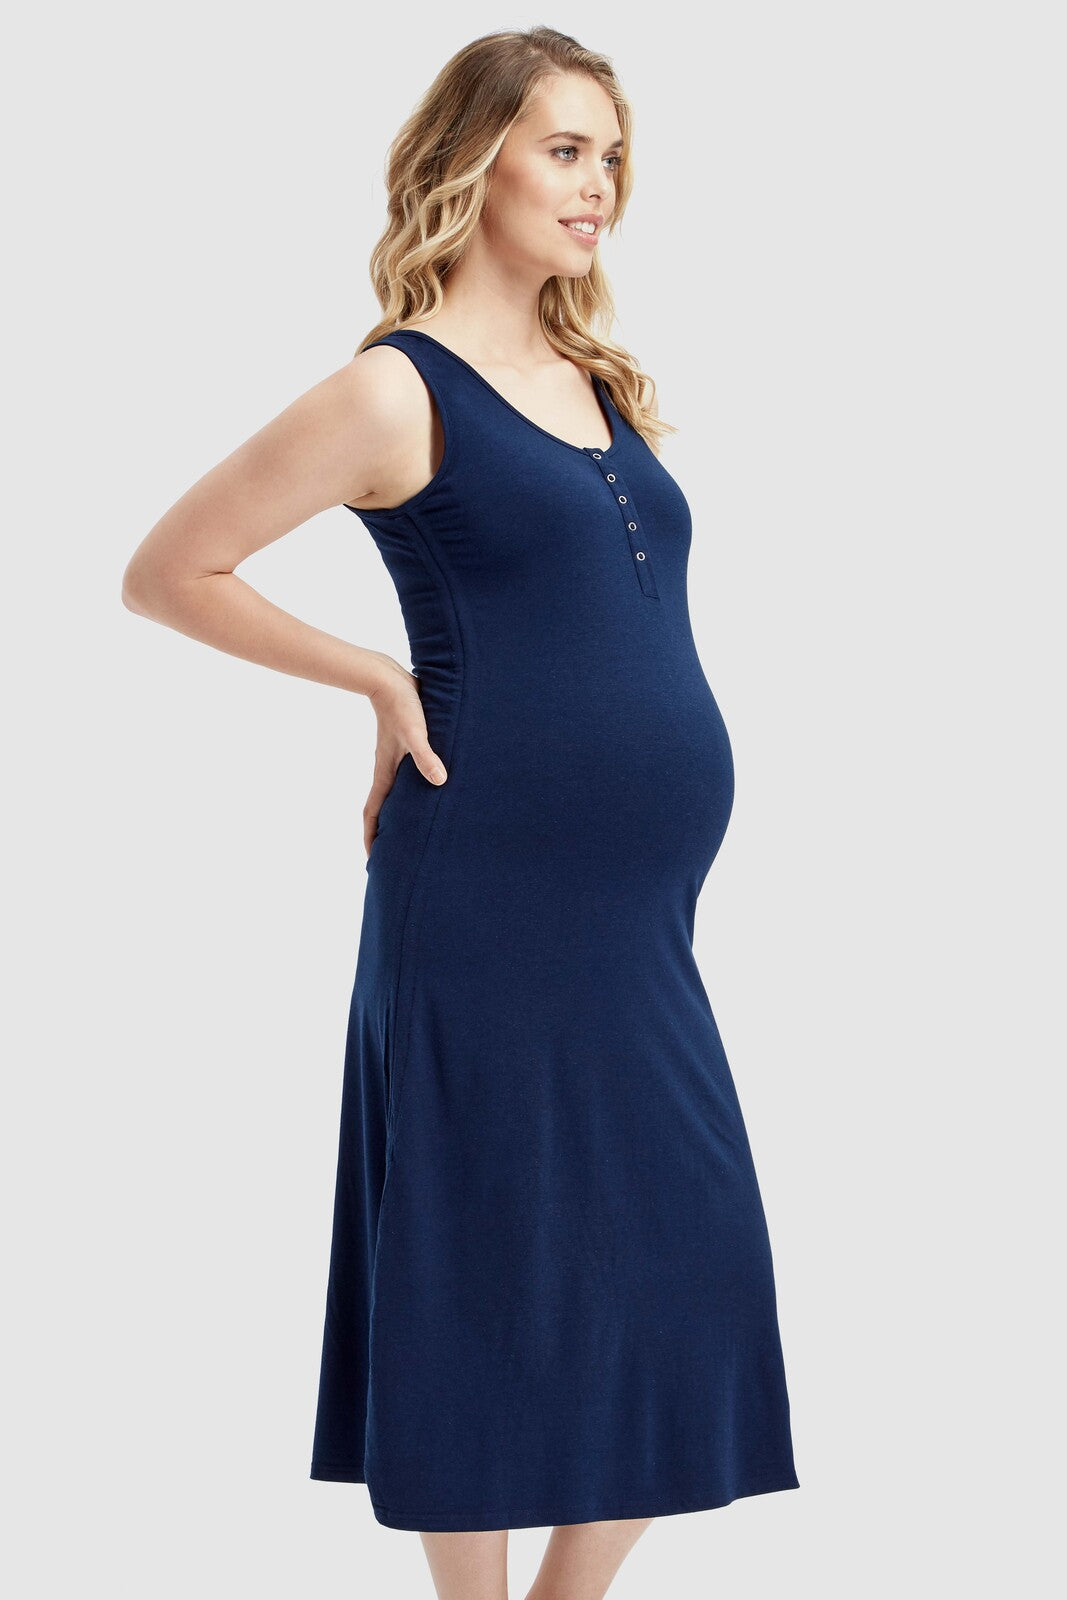 Organic Bamboo Henley Maternity Tank Dress Dress from Bamboo Body maternity online store brisbane sydney perth australia